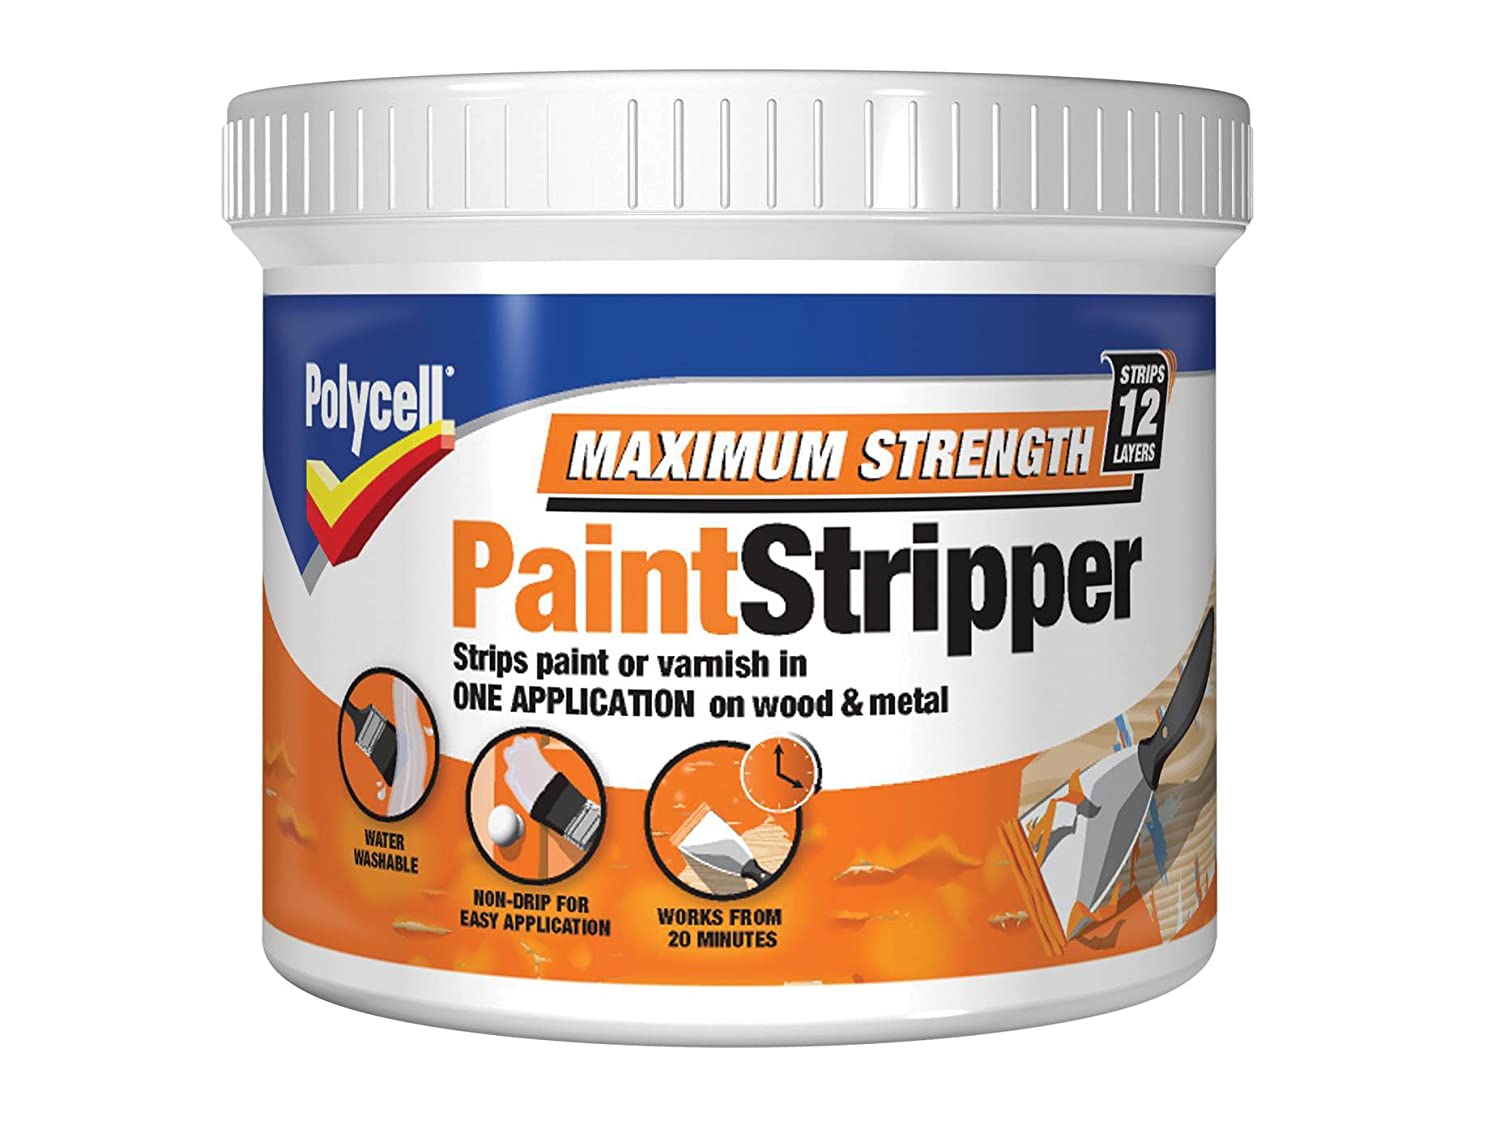 Paint stripper cost